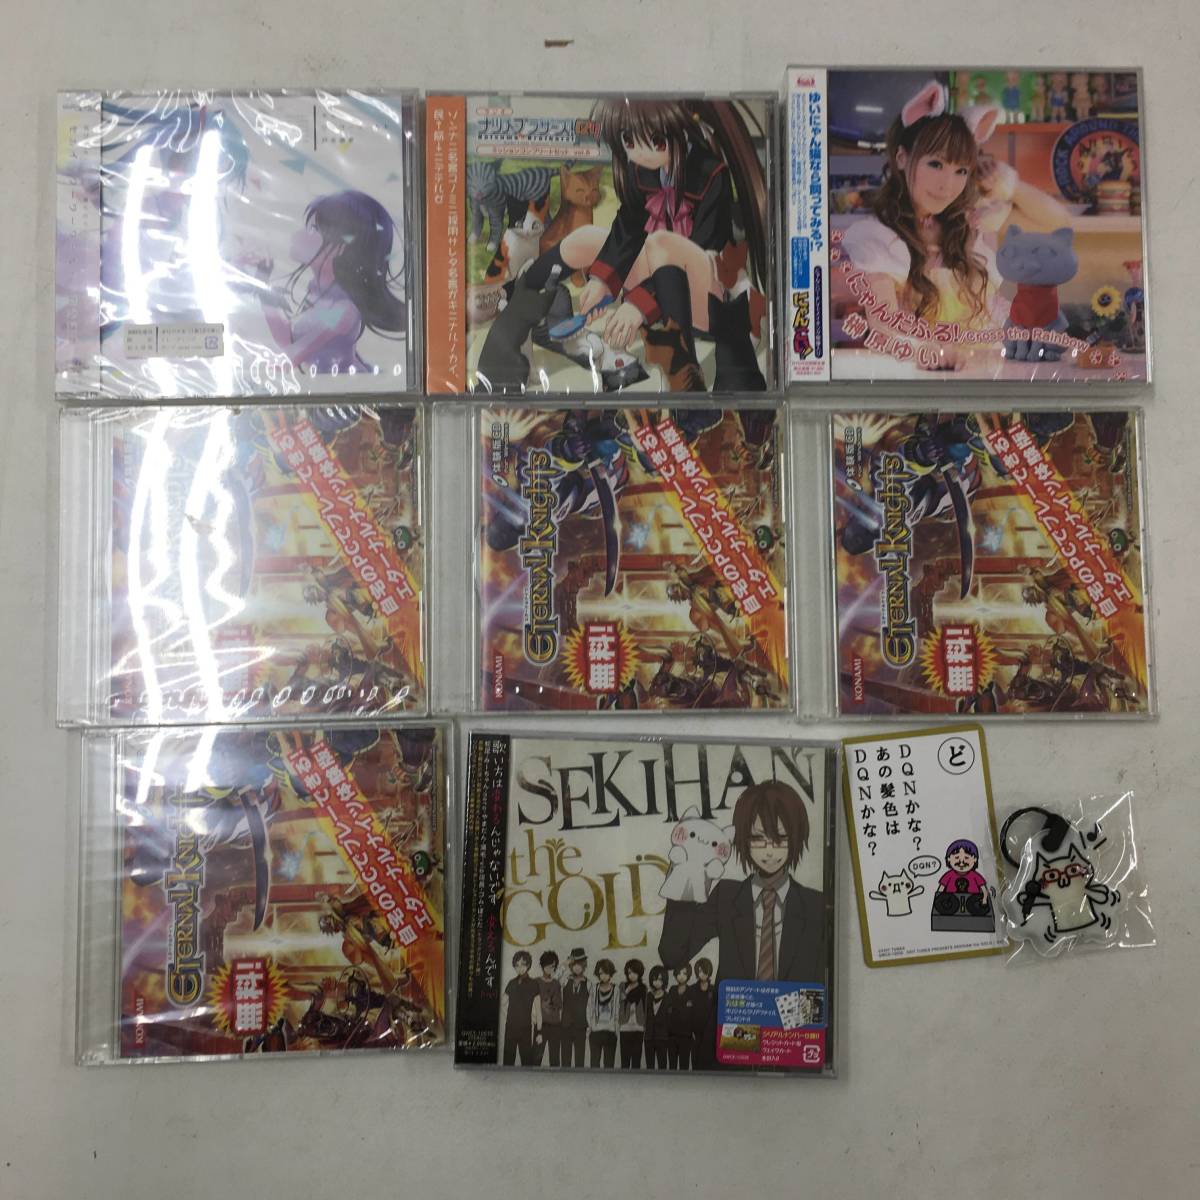 [1 jpy ~]CD DVD anime bo Caro etc. set sale ( Hatsune Miku Evangelion bake mono. . Rav Live Suzumiya Haruhi no Yuutsu ) etc. [ secondhand goods ]